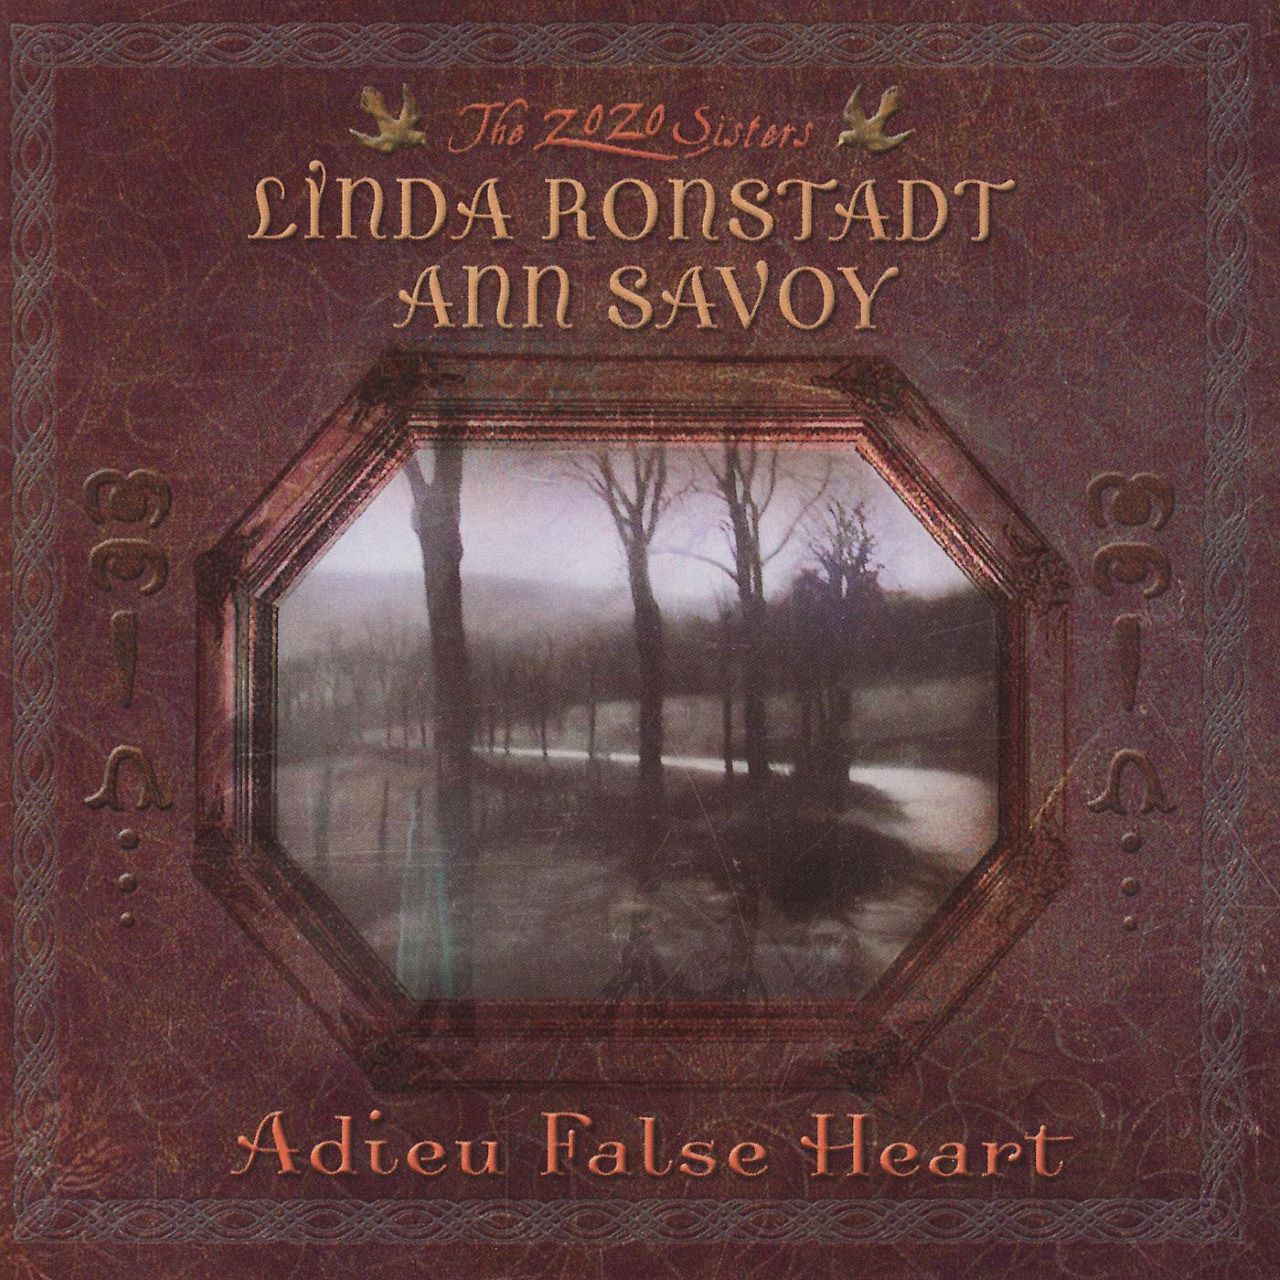 Linda Ronstadt & Ann Savoy - Adieu False Heart cover album